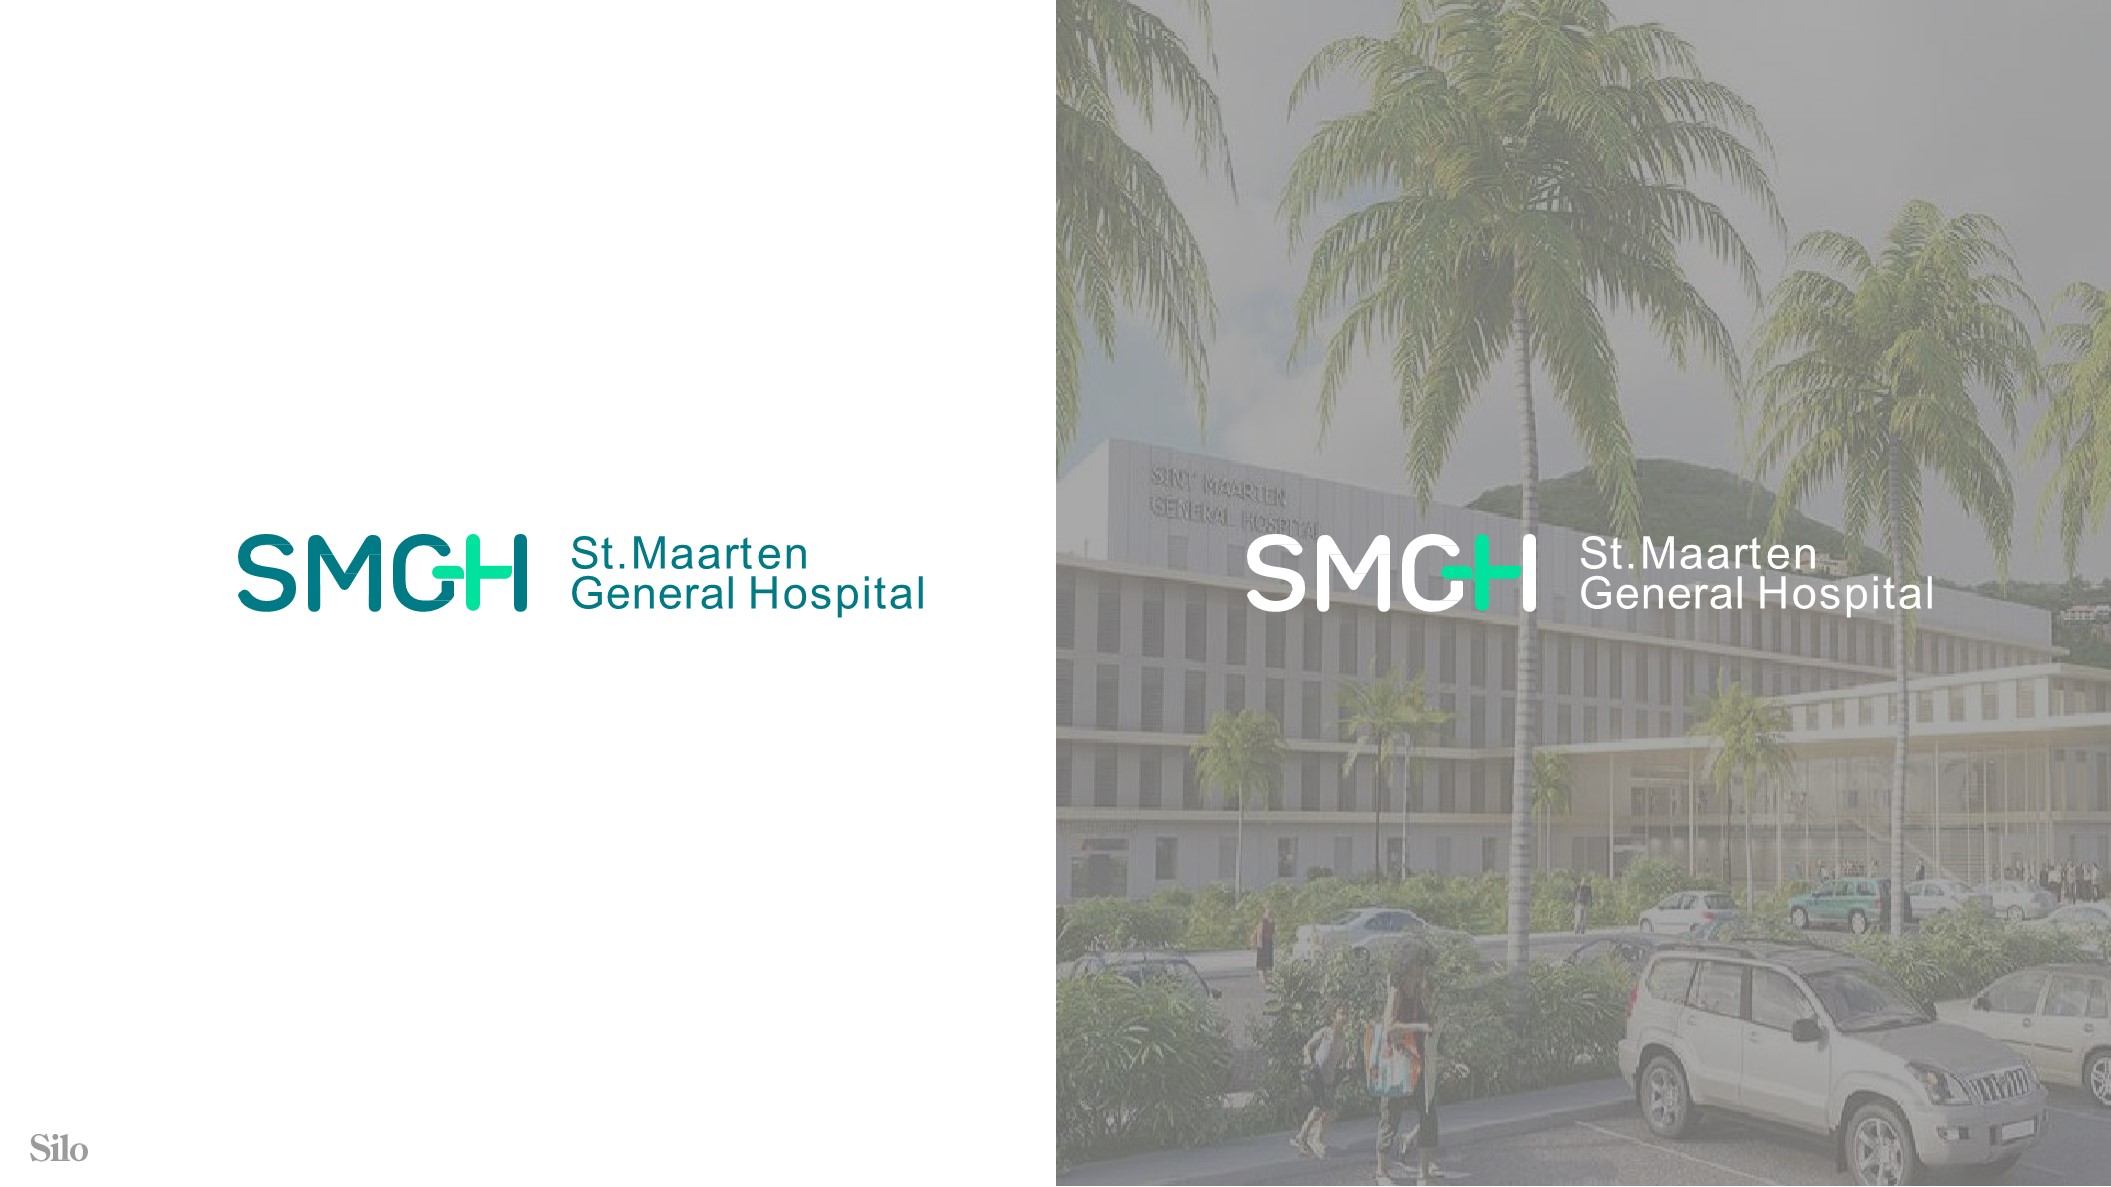 SMMC staff vote for new hospital logo